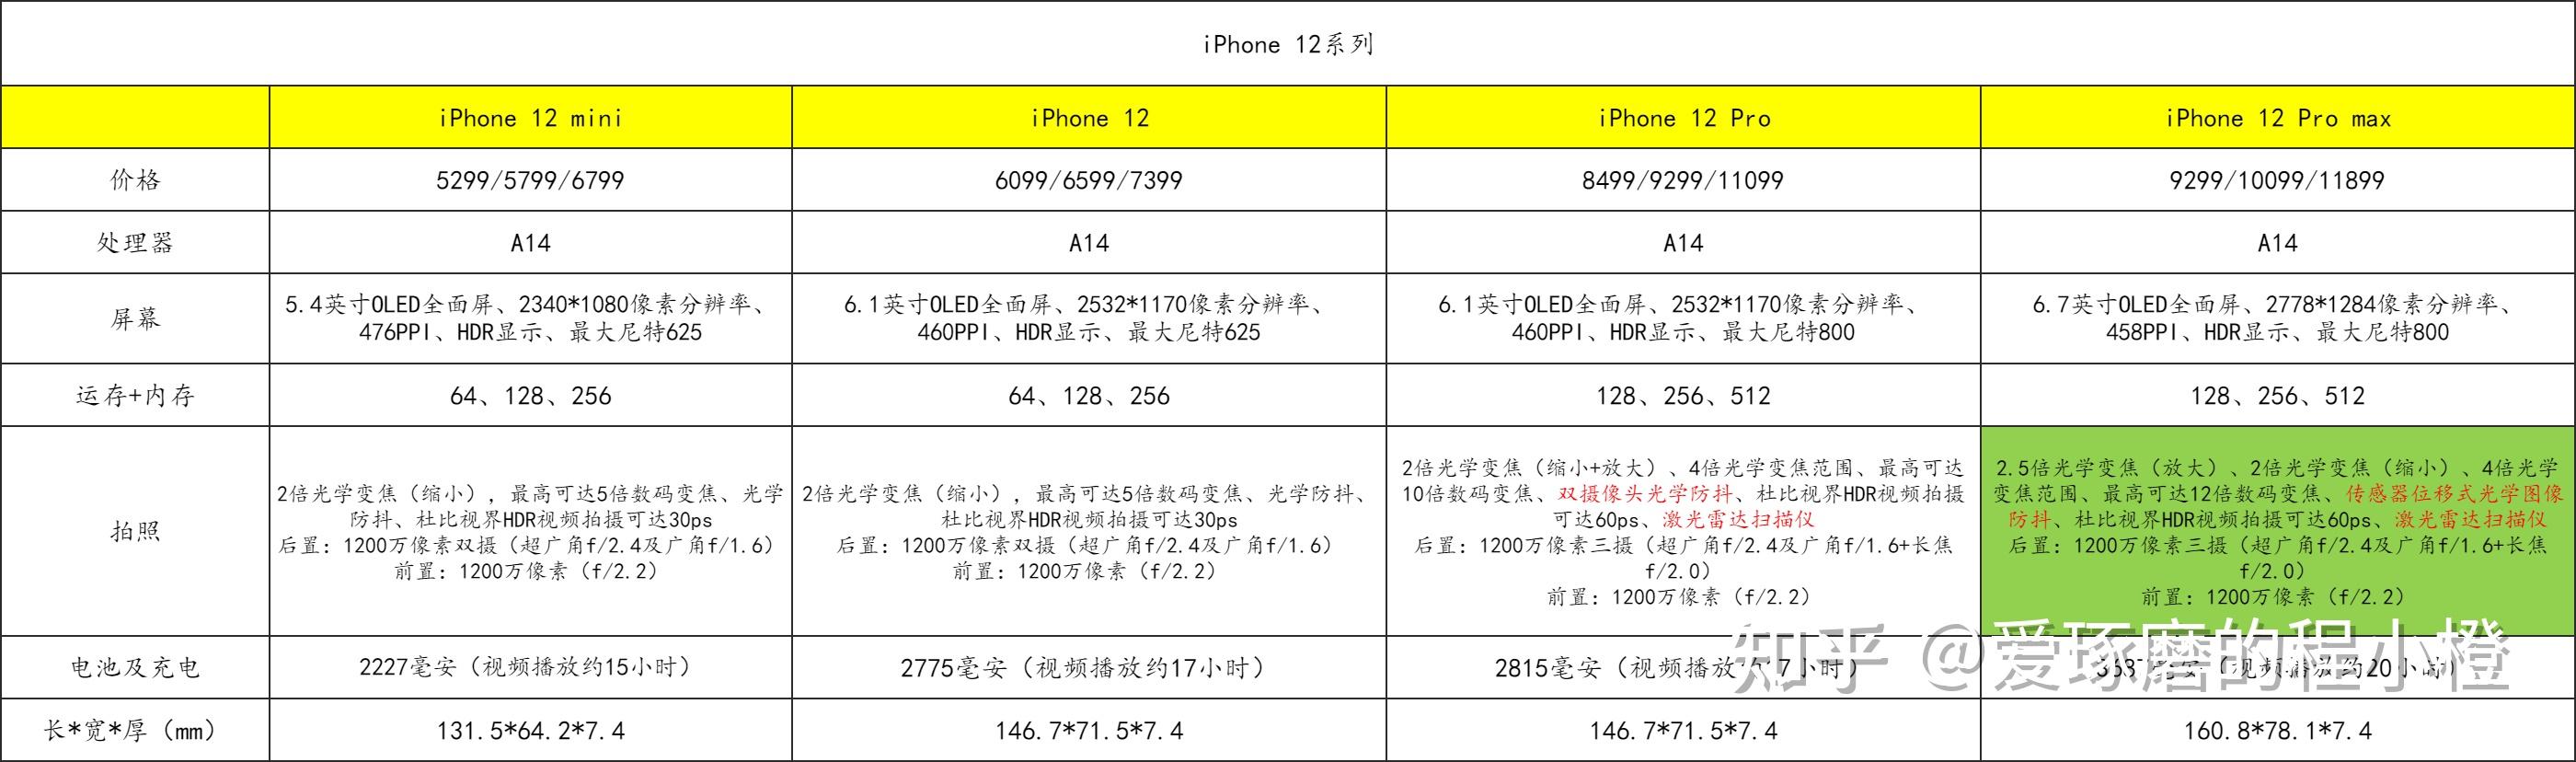 iphone13怎么样i手机参数对比iiphone13比iphone12提升了哪些方面